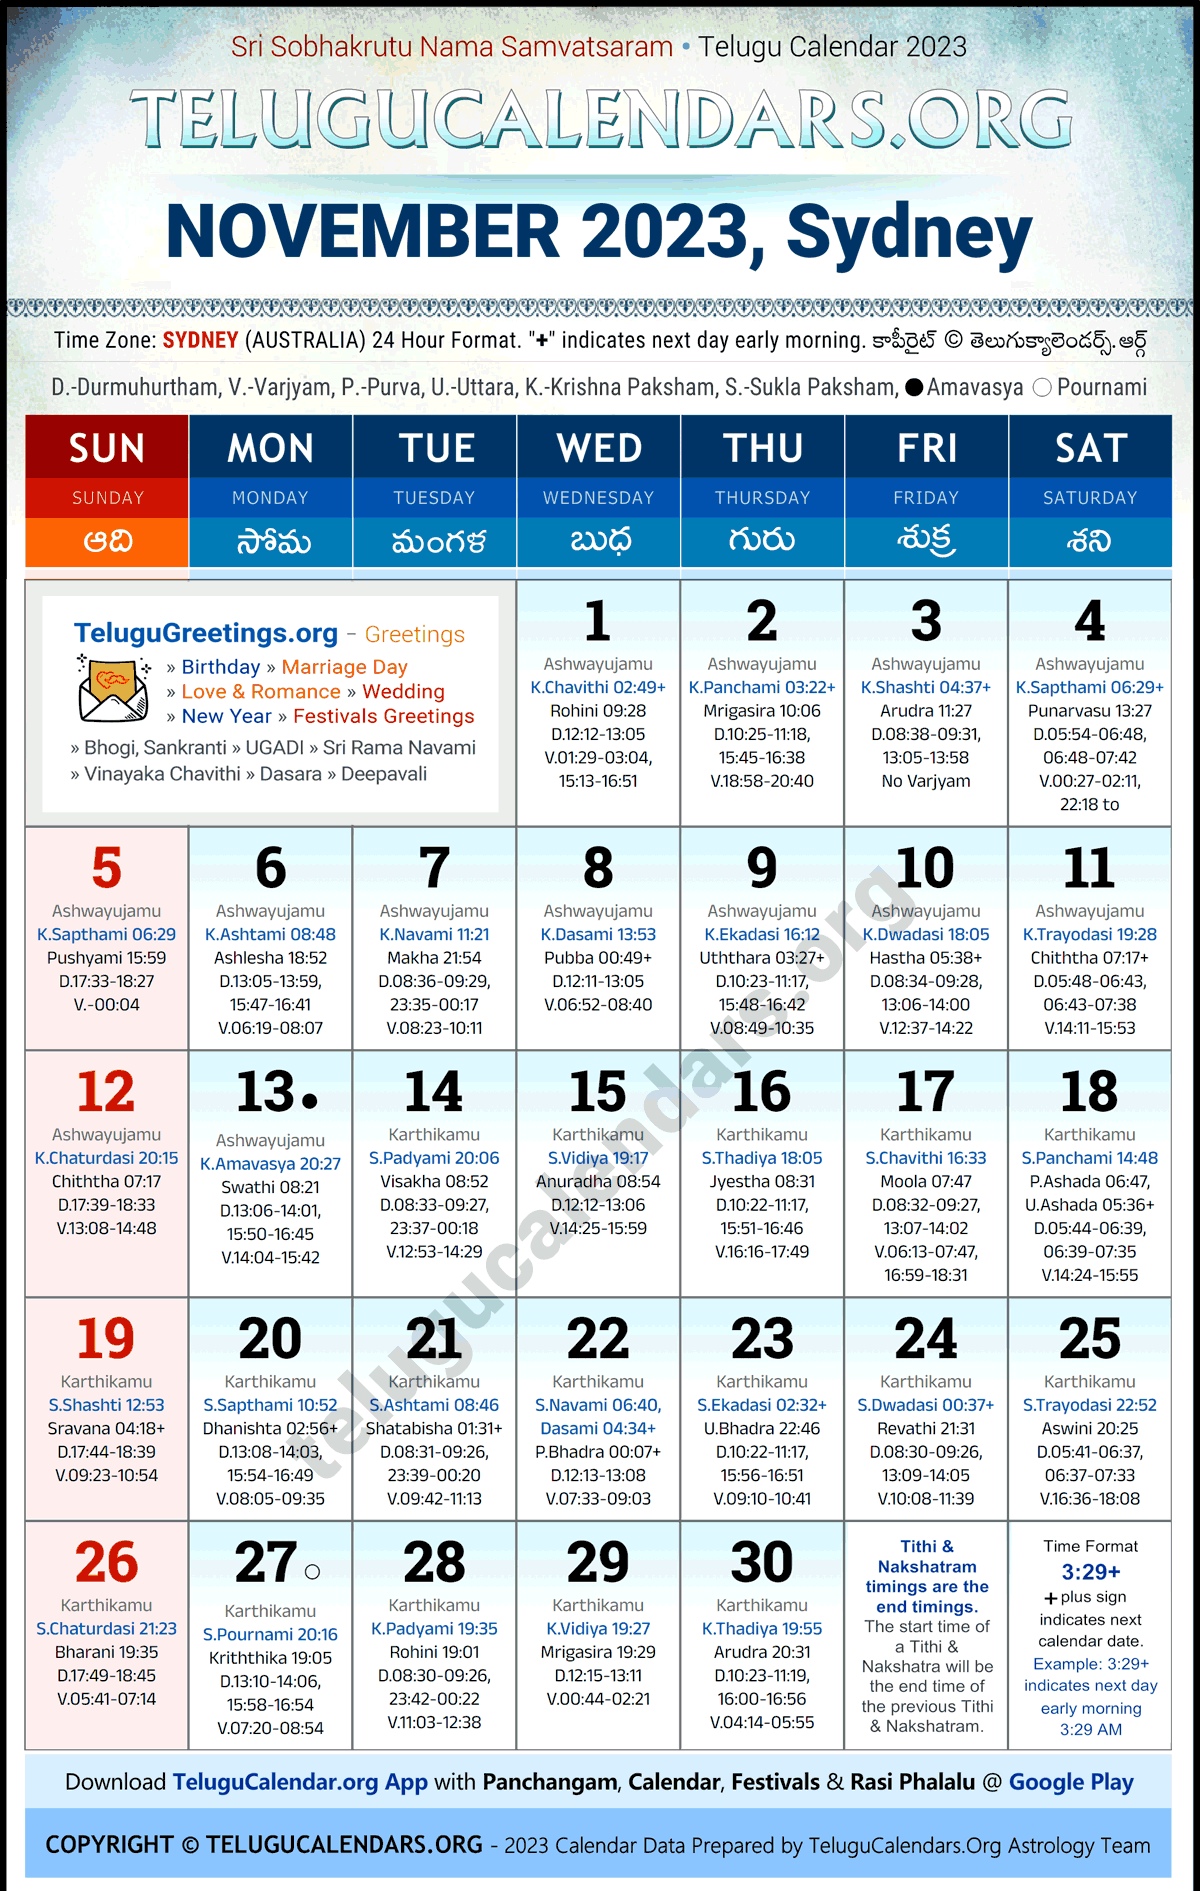 Telugu Calendar 2023 November Festivals for Sydney